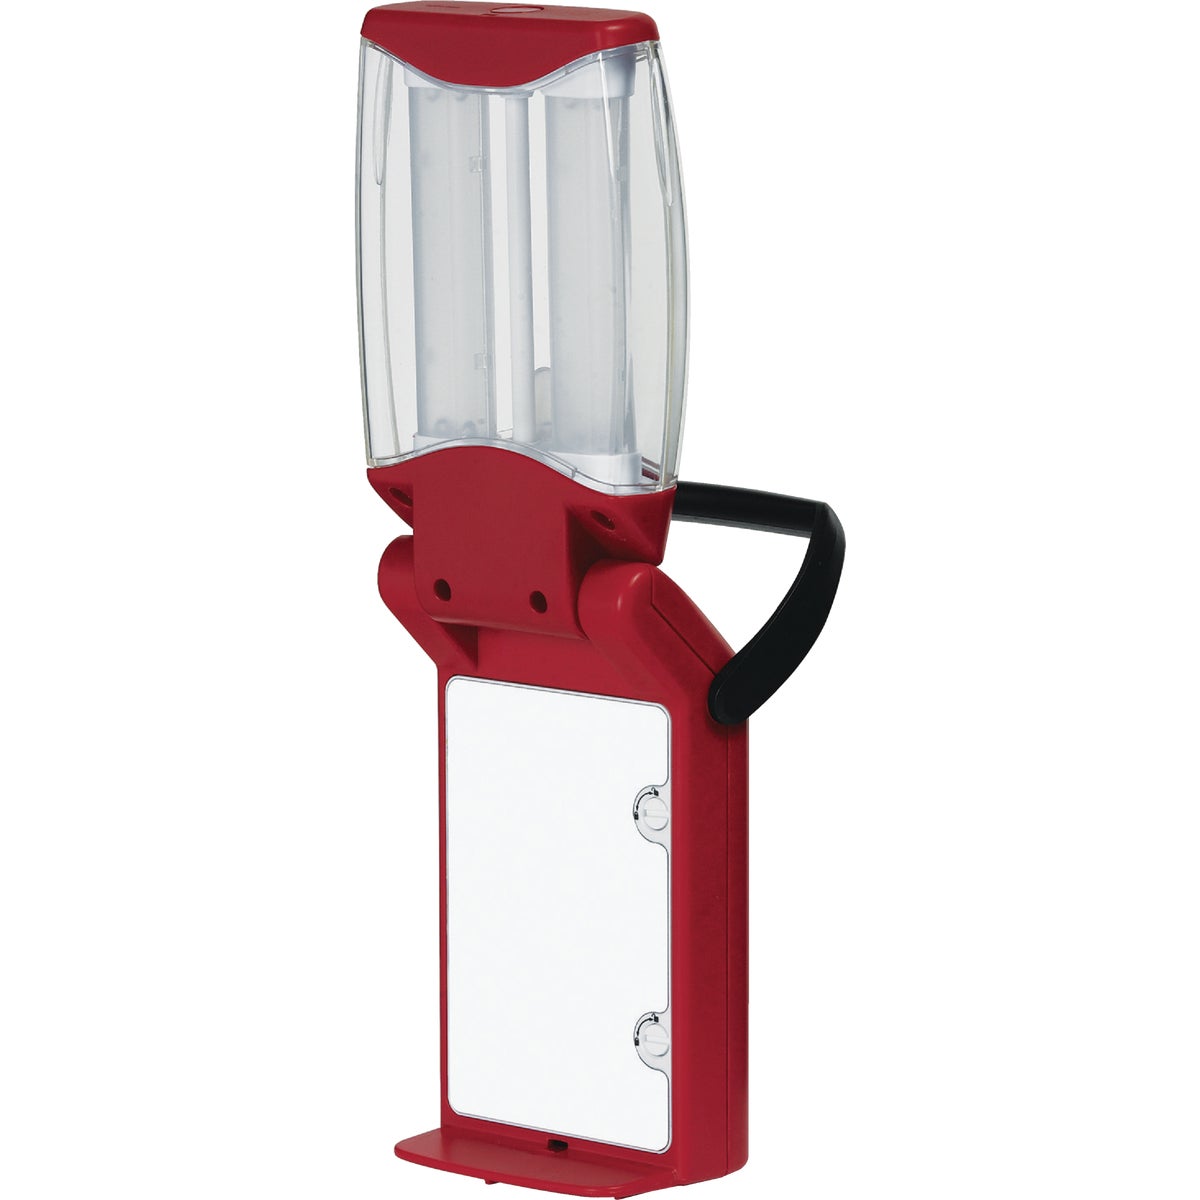 Item 808342, Folding LED (light emitting diode) lantern that is a versatile area light 